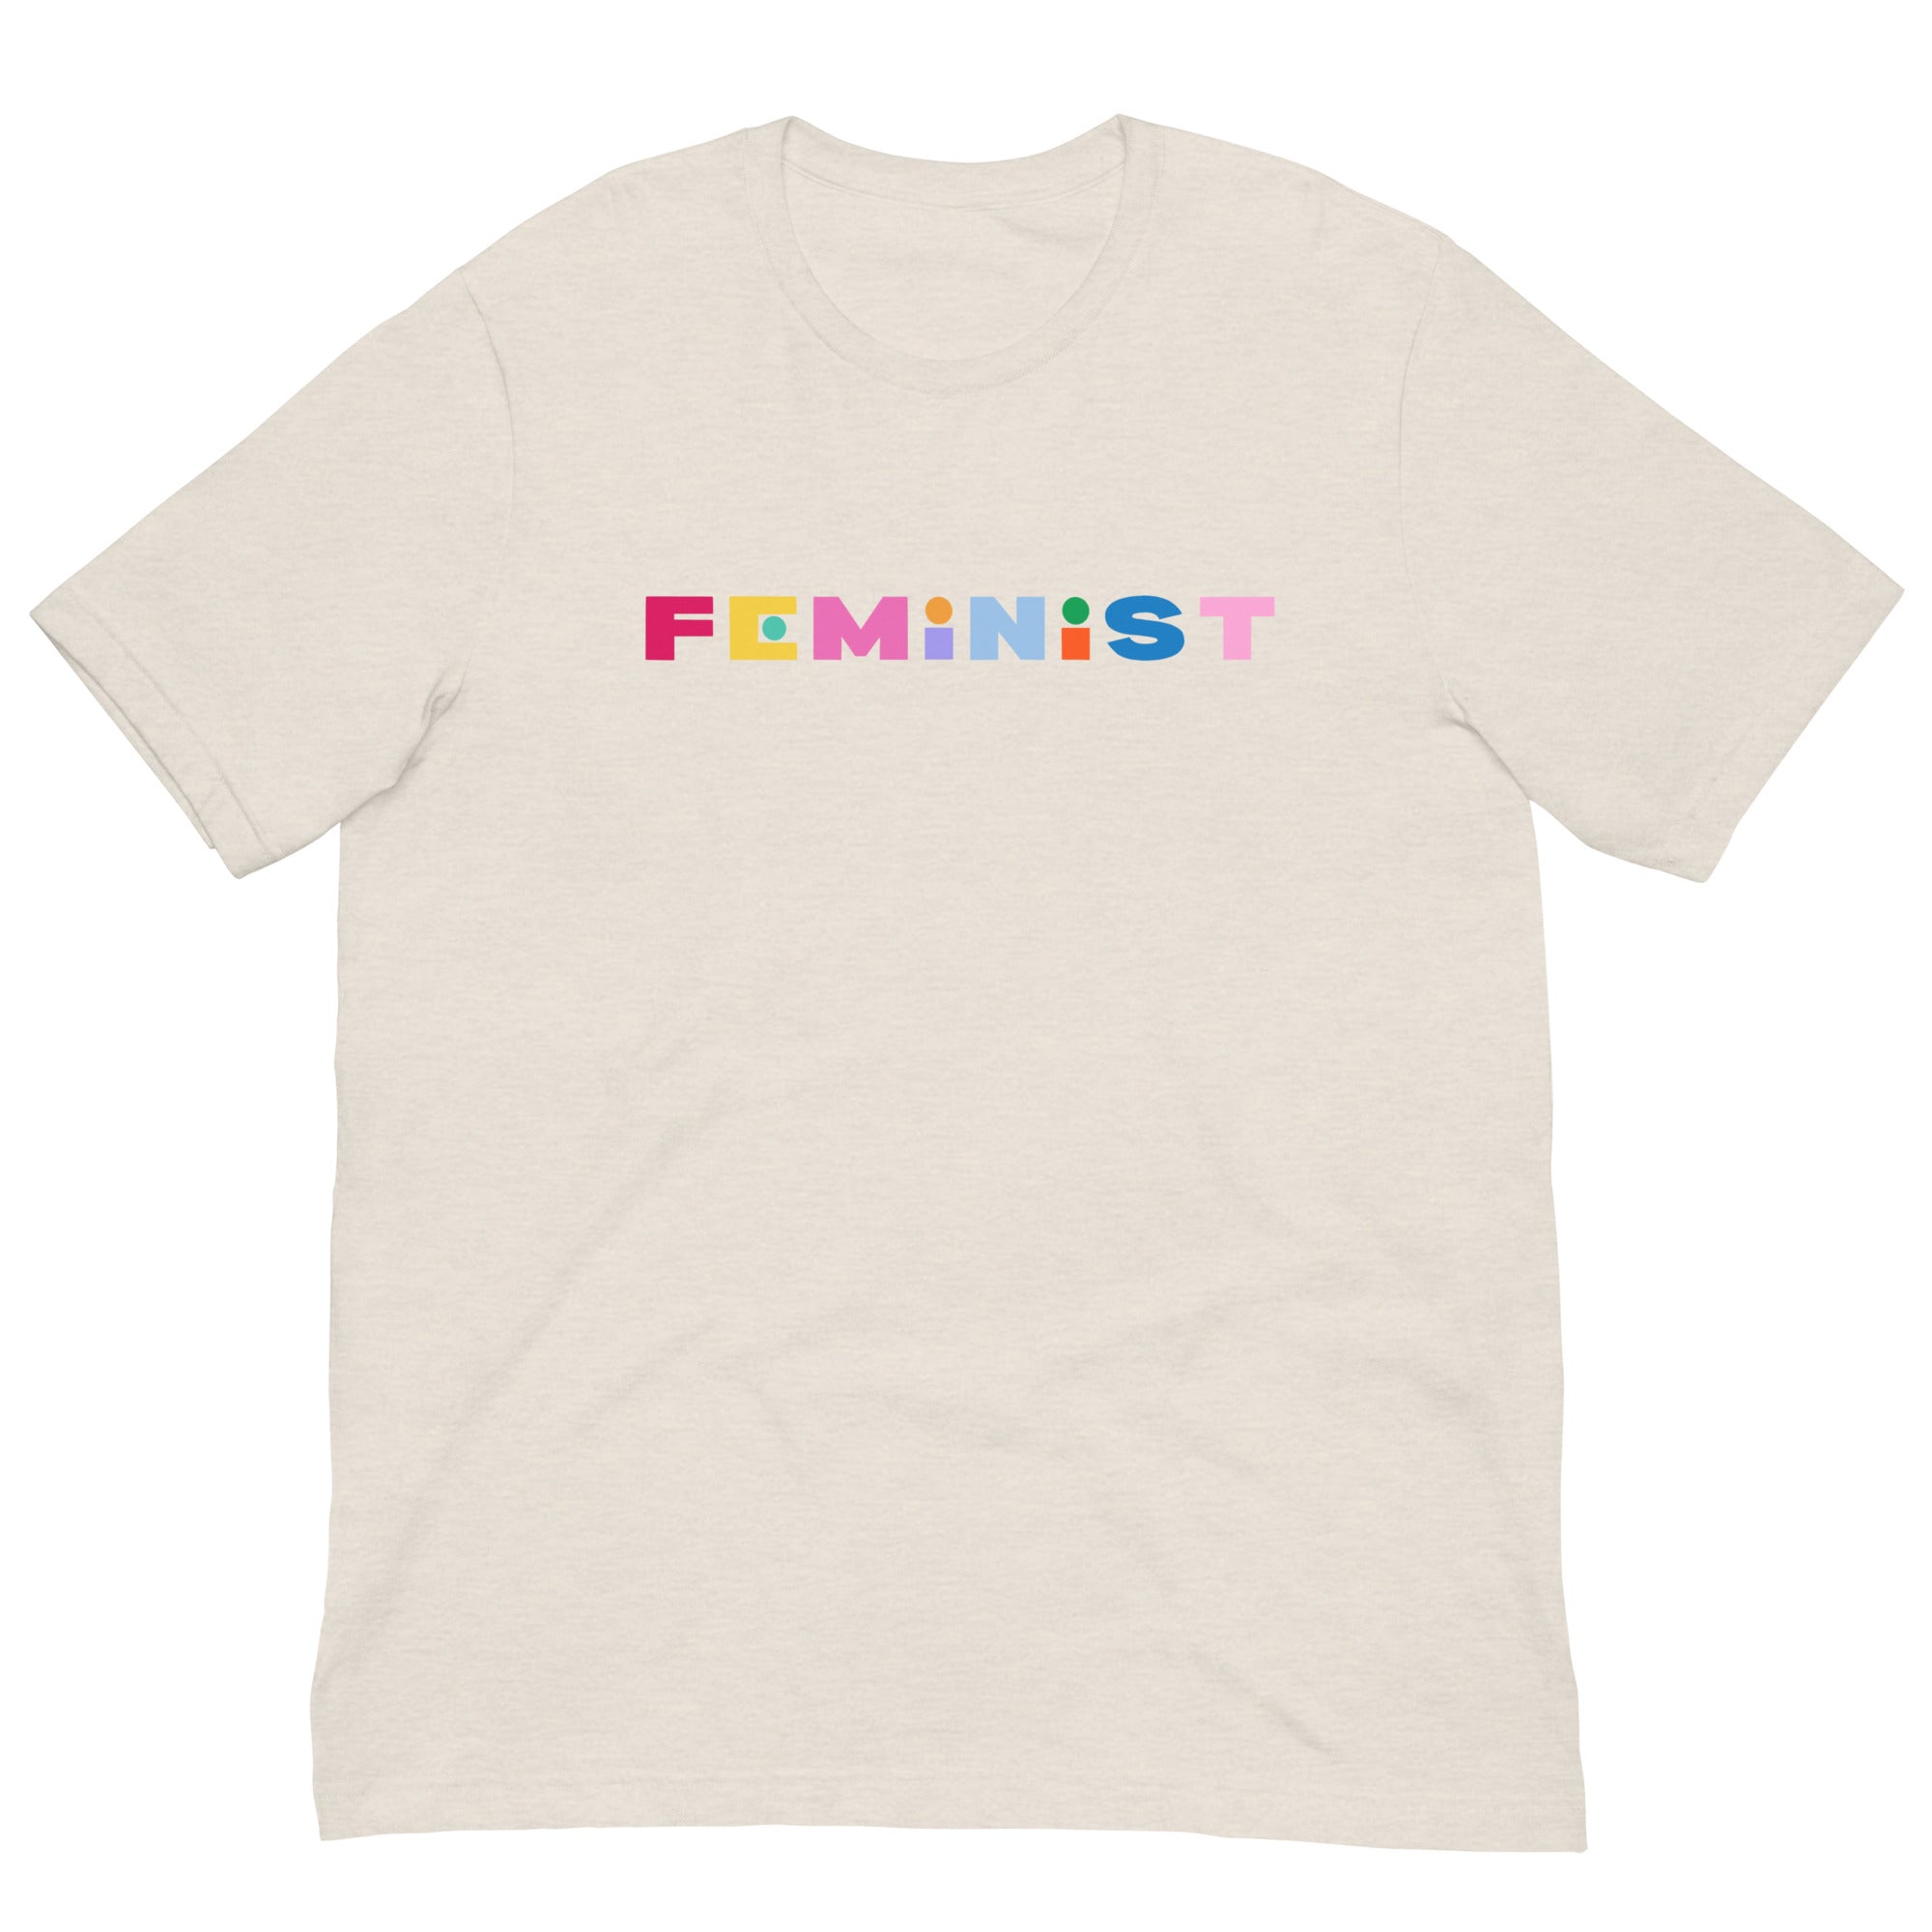 Feminist Unisex t-shirt - Shop Women’s Rights T-shirts - Feminist Trash Store - Heather Dust